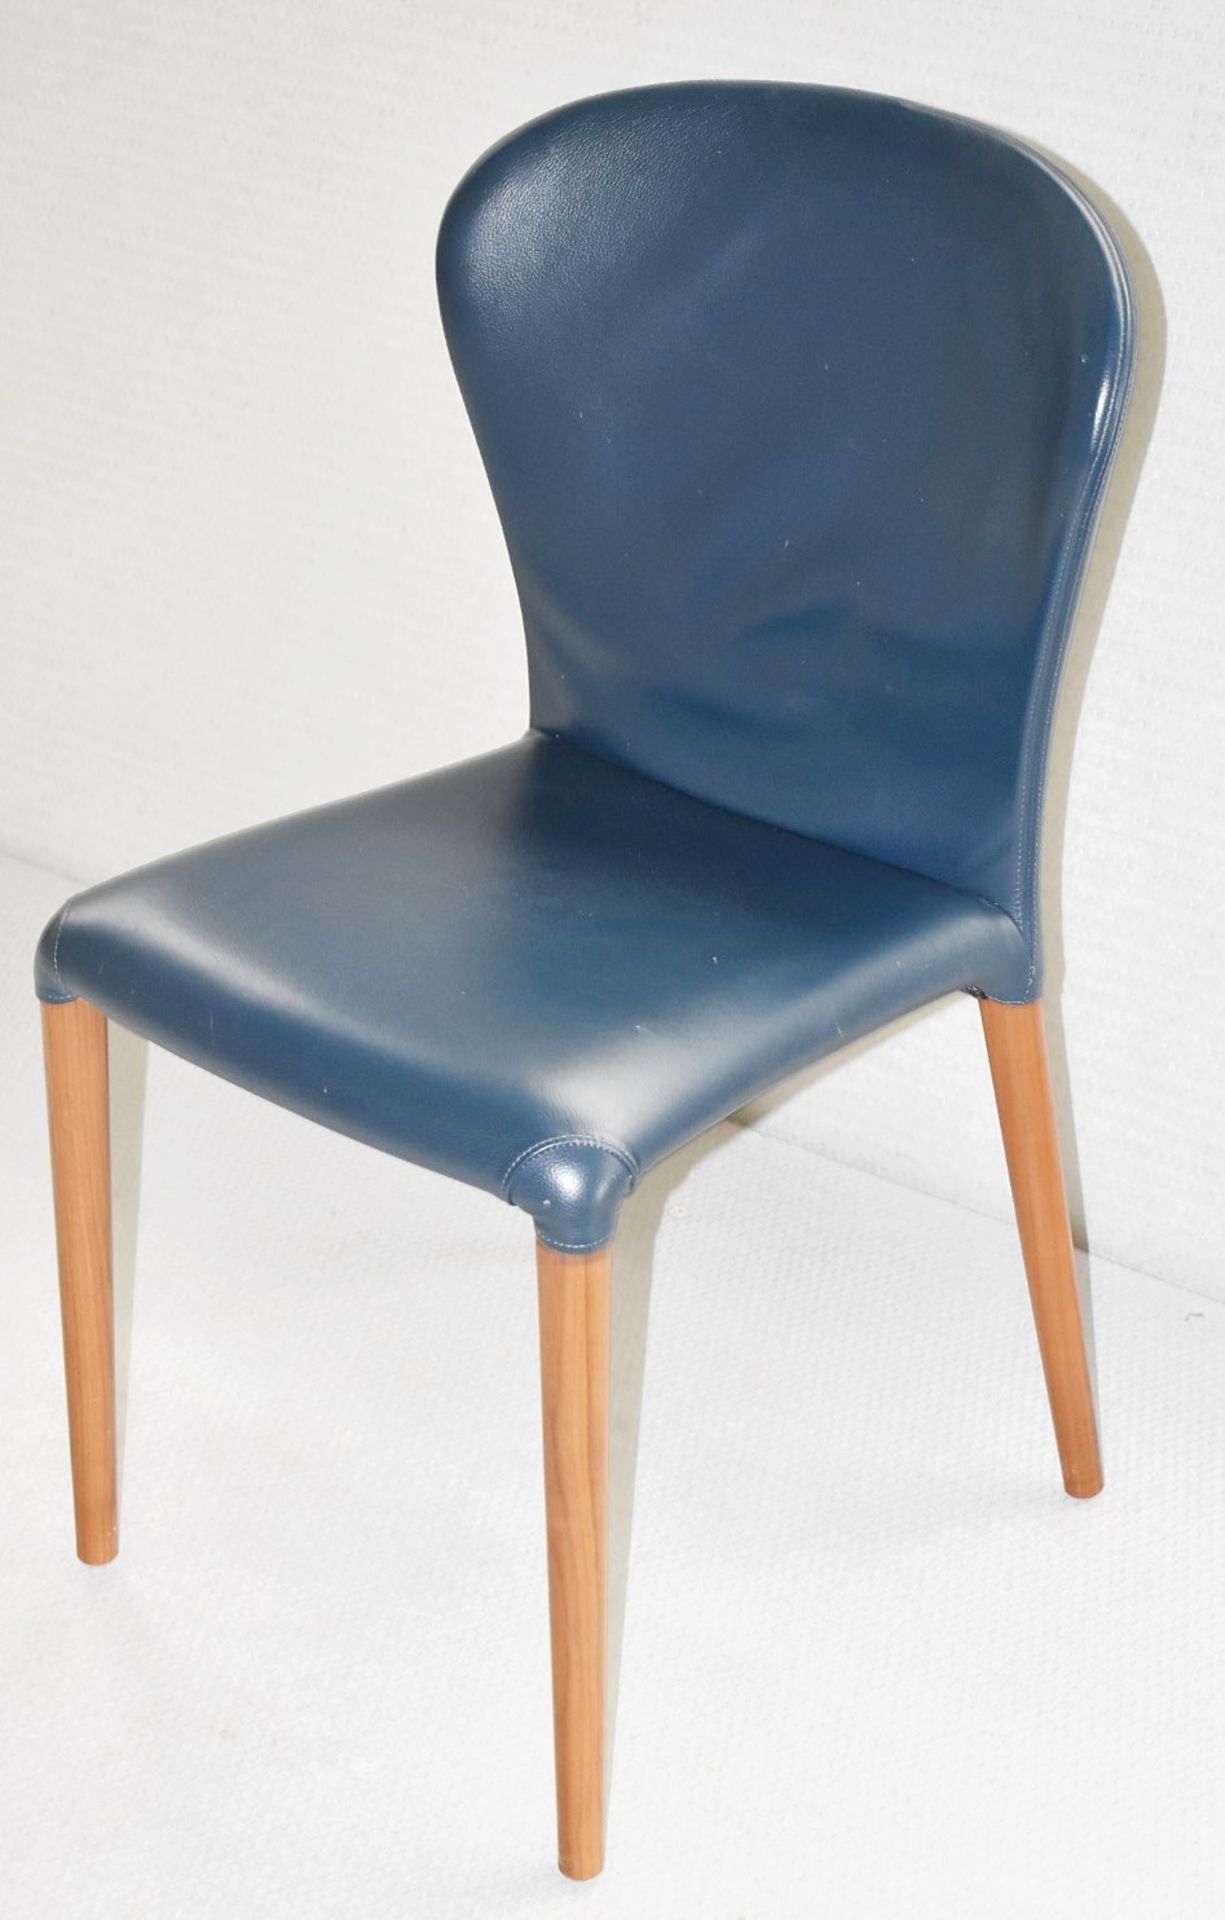 1 x PORADA 'Astrid' Italian Designer Leather Upholstered Chair, In Blue - Original Price £1,110